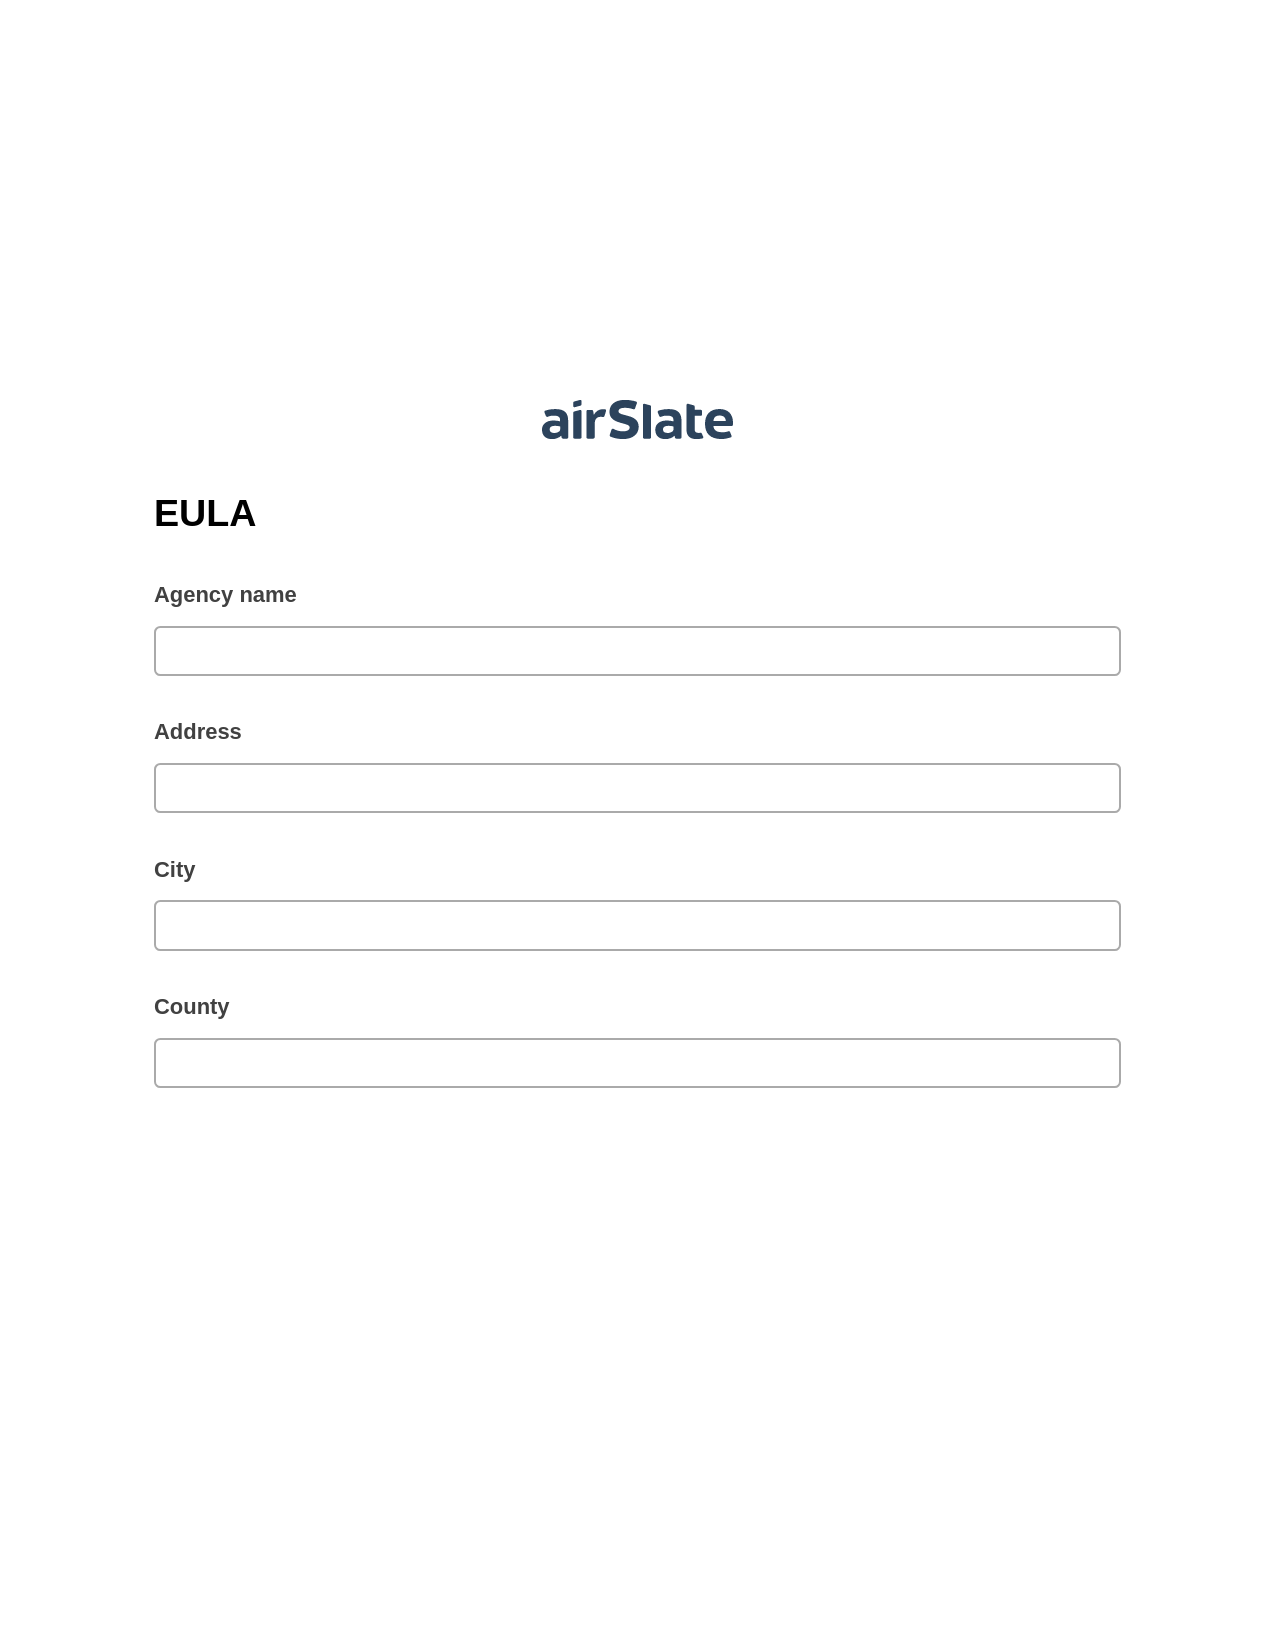 EULA Pre-fill from Google Sheets Bot, Revoke Access Bot, Slack Notification Postfinish Bot